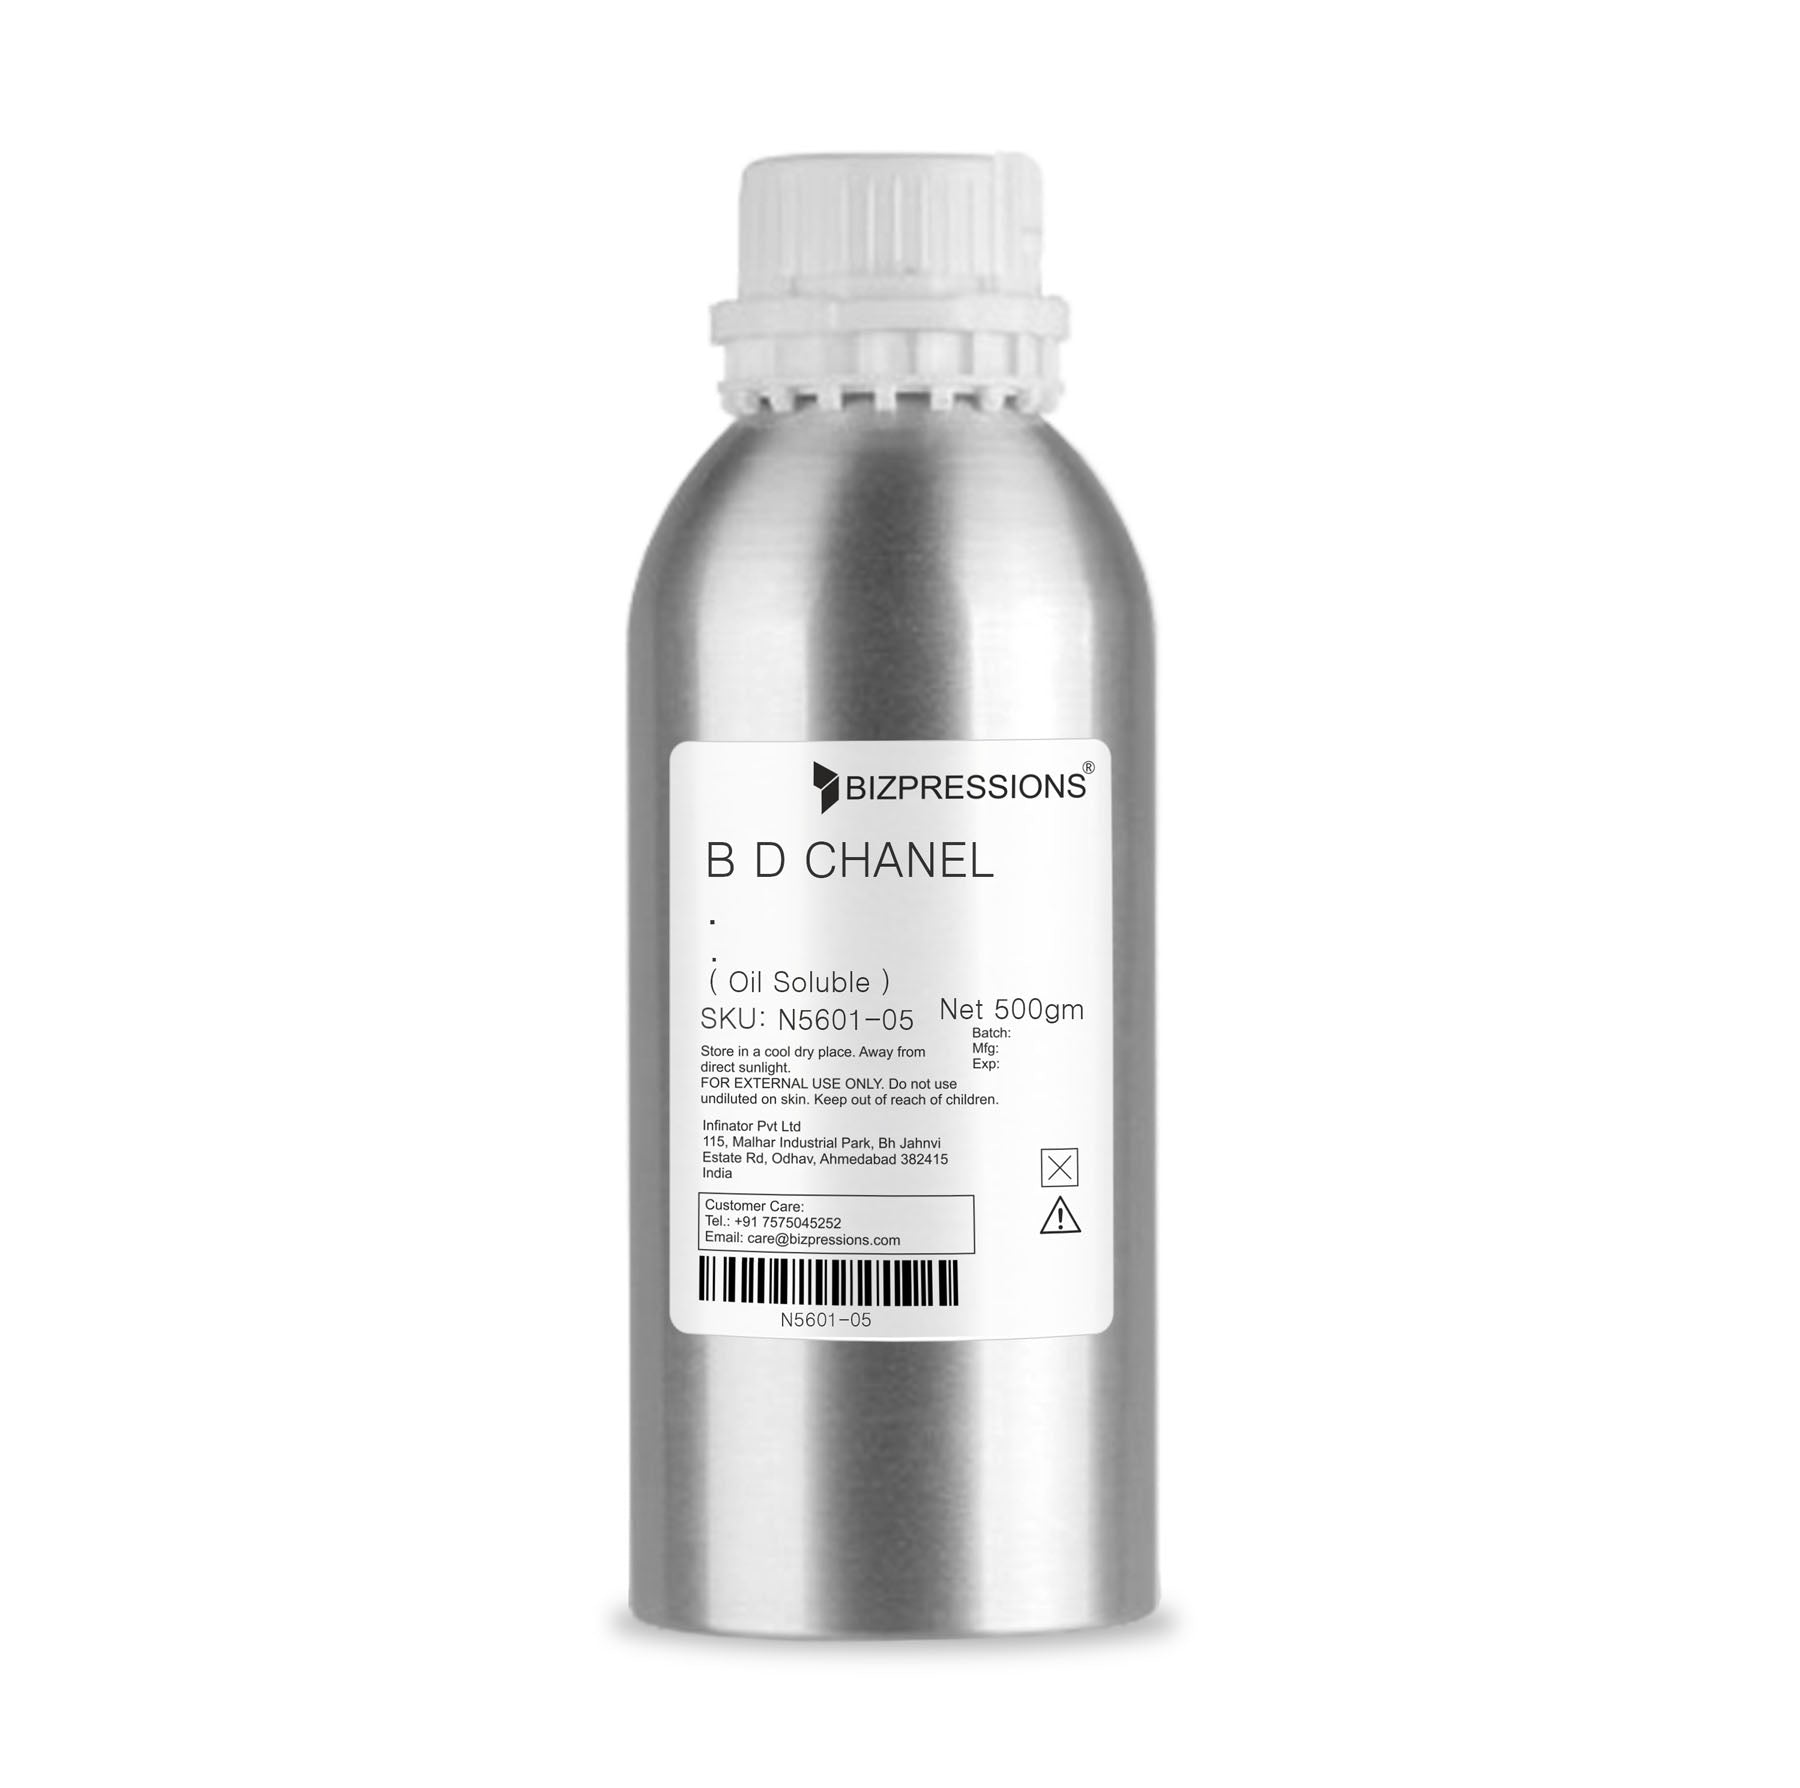 B D CHANEL - Fragrance ( Oil Soluble ) - 500 gm